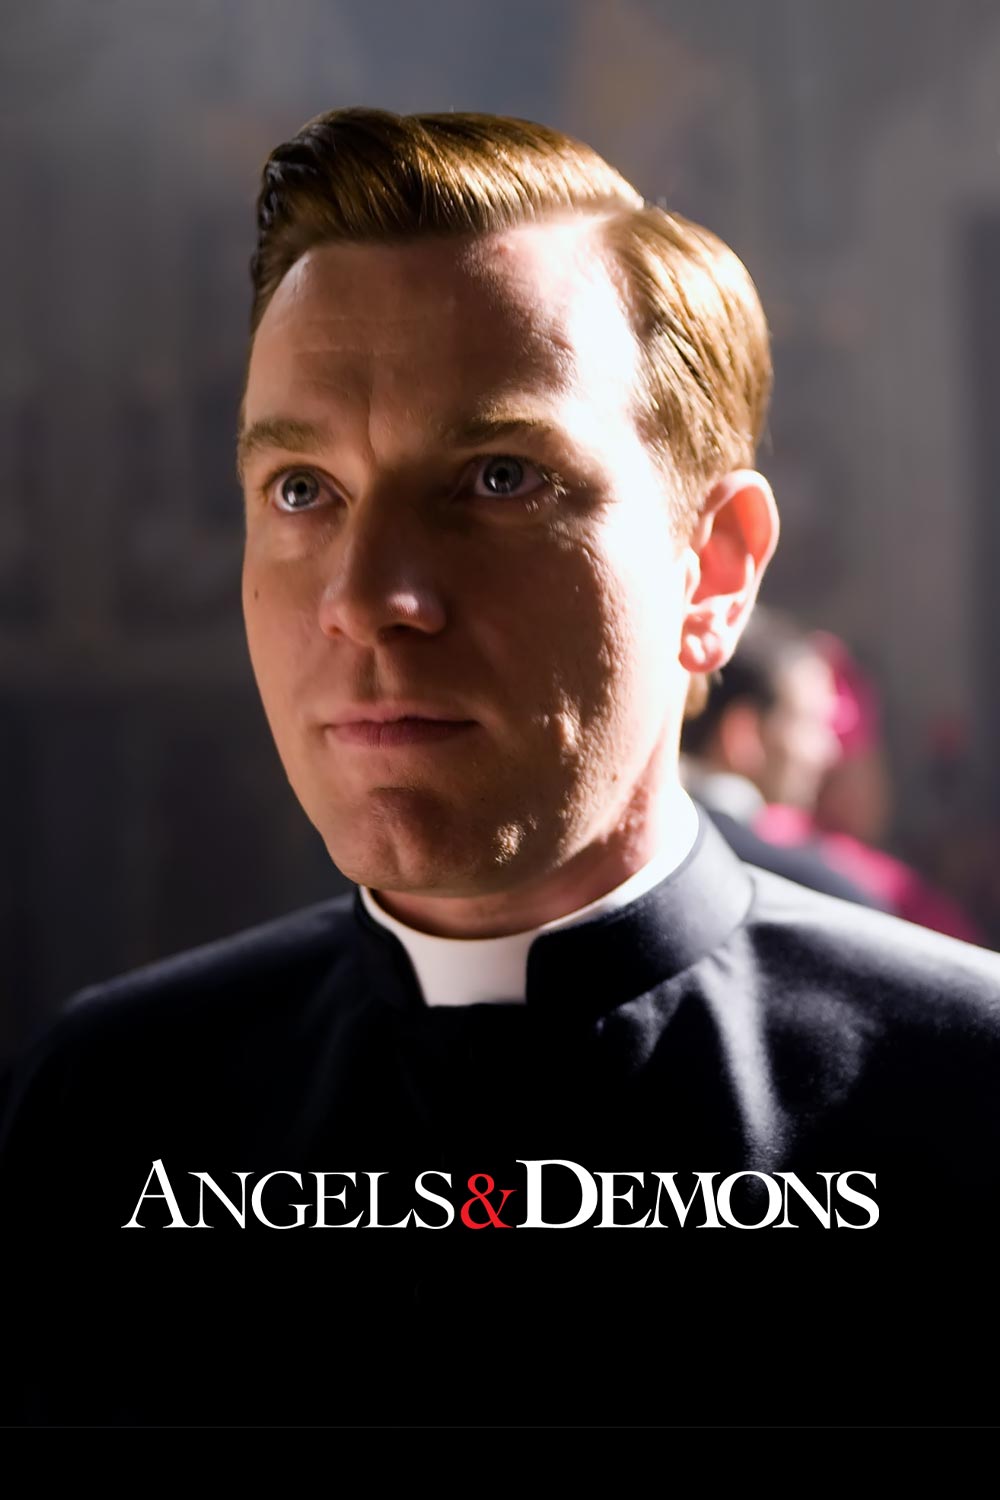 Watch Angels & Demons Online